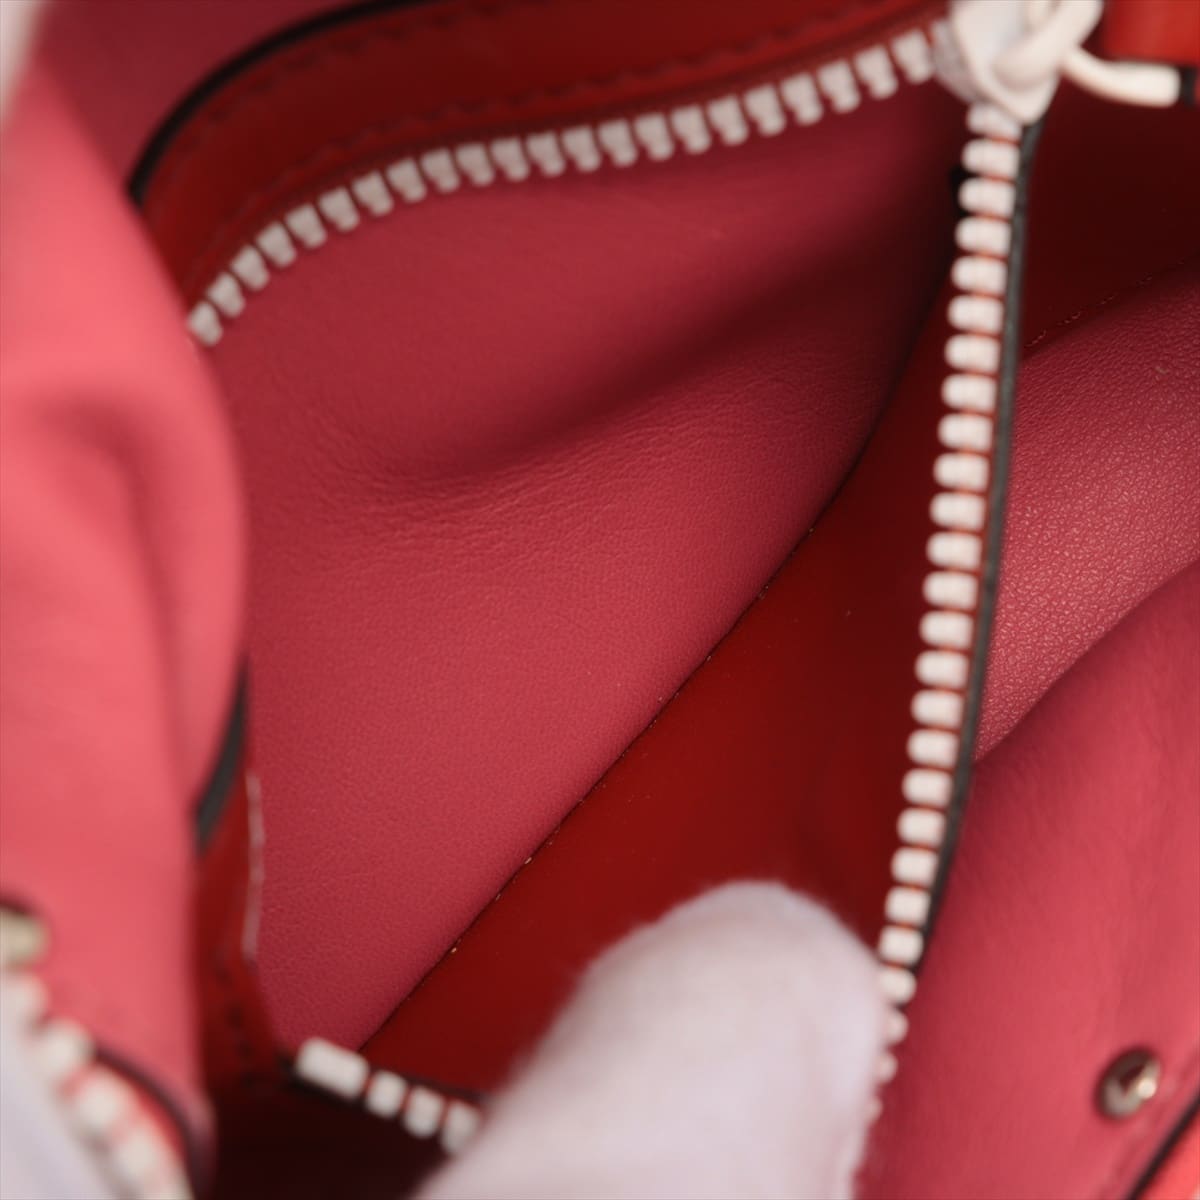 Valentino Garavani Rock Studs leather x studs Sling backpack Pink